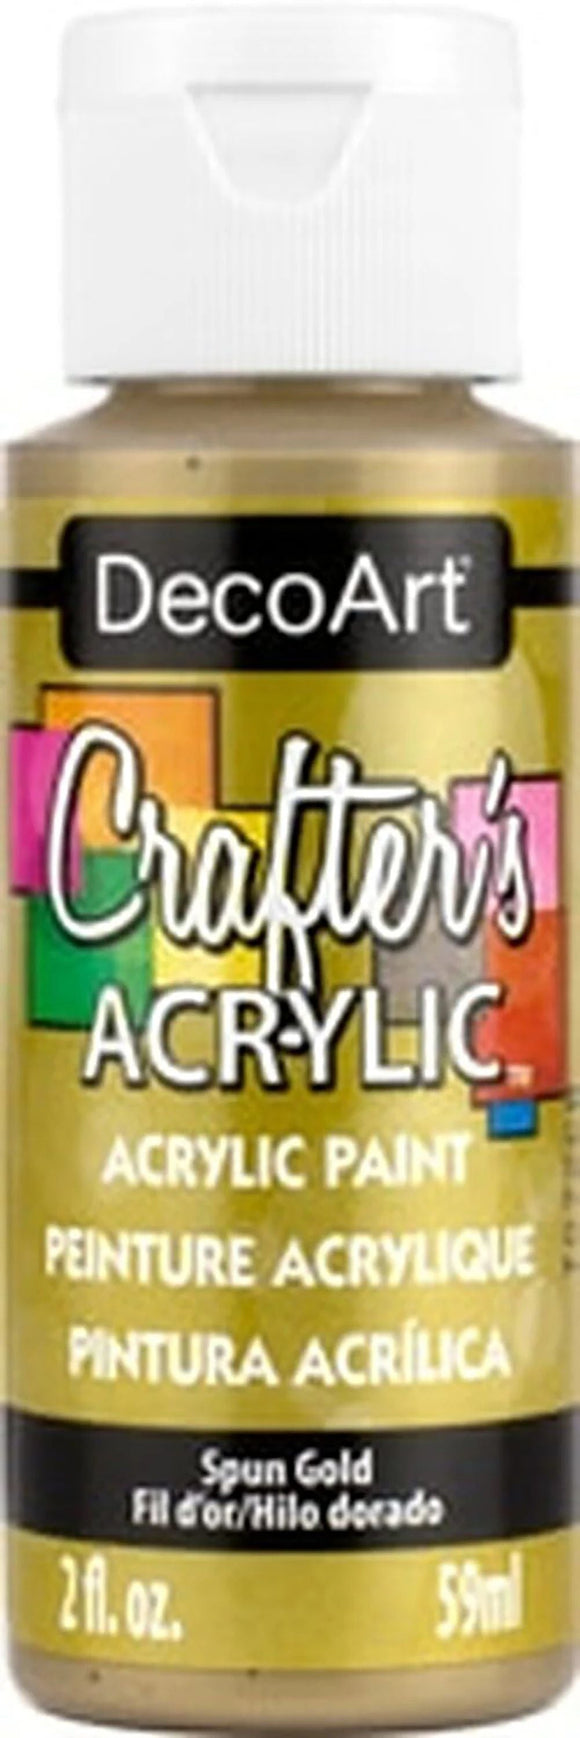 Deco Art Crafter's Acrylic Paint - Spun Gold 59ml